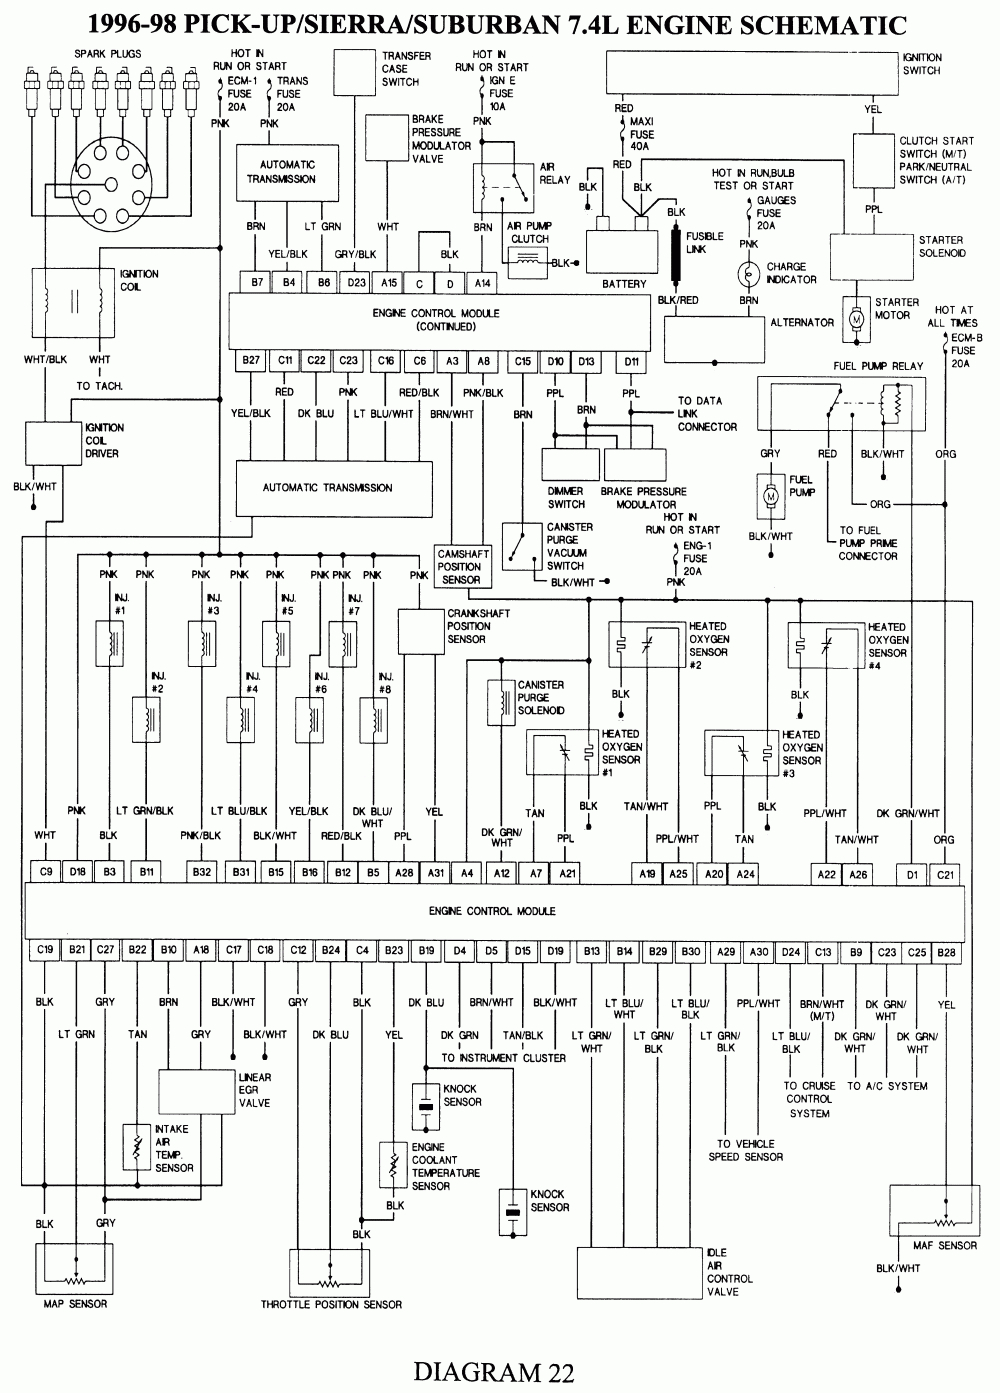 1997 Chevy 3500 Wiring Diagram - Wiring Diagram Explained - 1997 Chevy Silverado Wiring Diagram